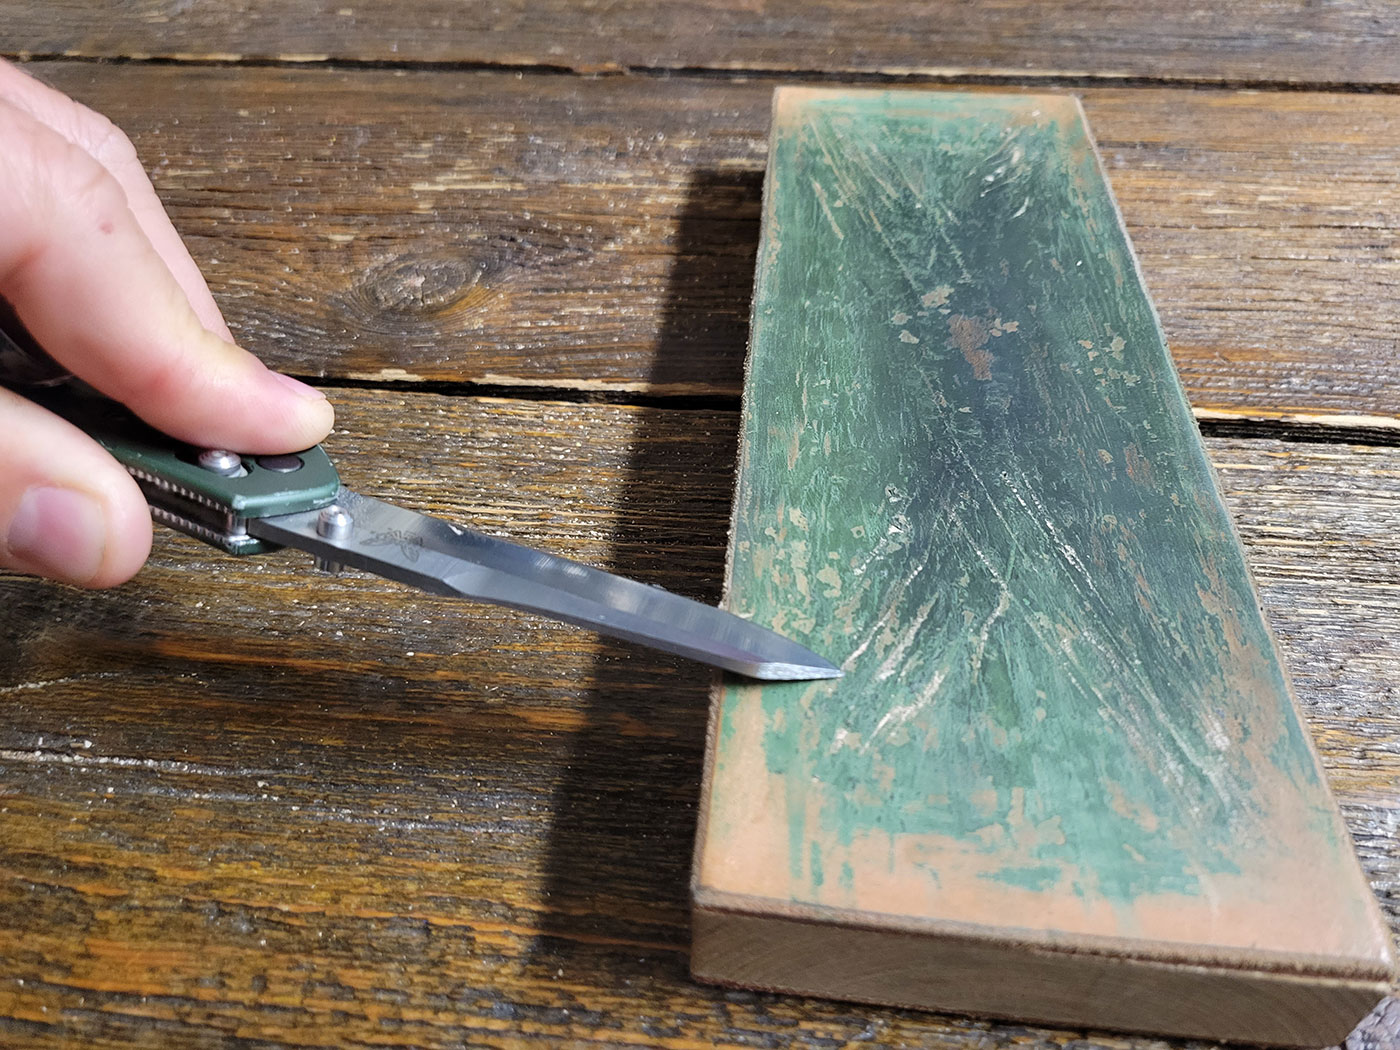 I've raised a Burr, What's Next? Knife Sharpening Step 2: Honing - Work  Sharp Sharpeners